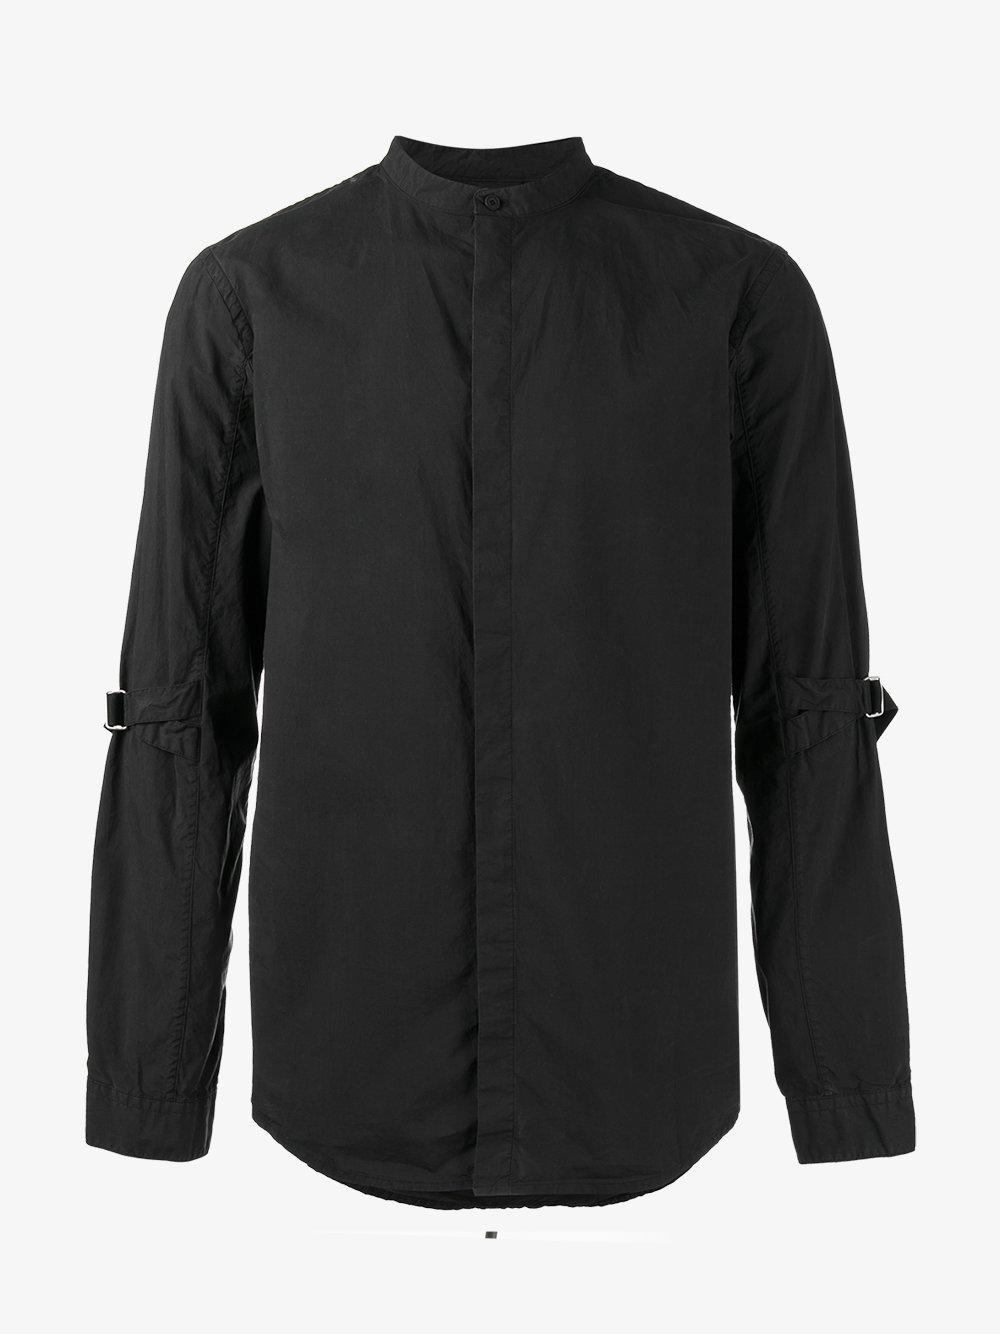 Lyst - Helmut Lang Collarless Strap Shirt in Black for Men